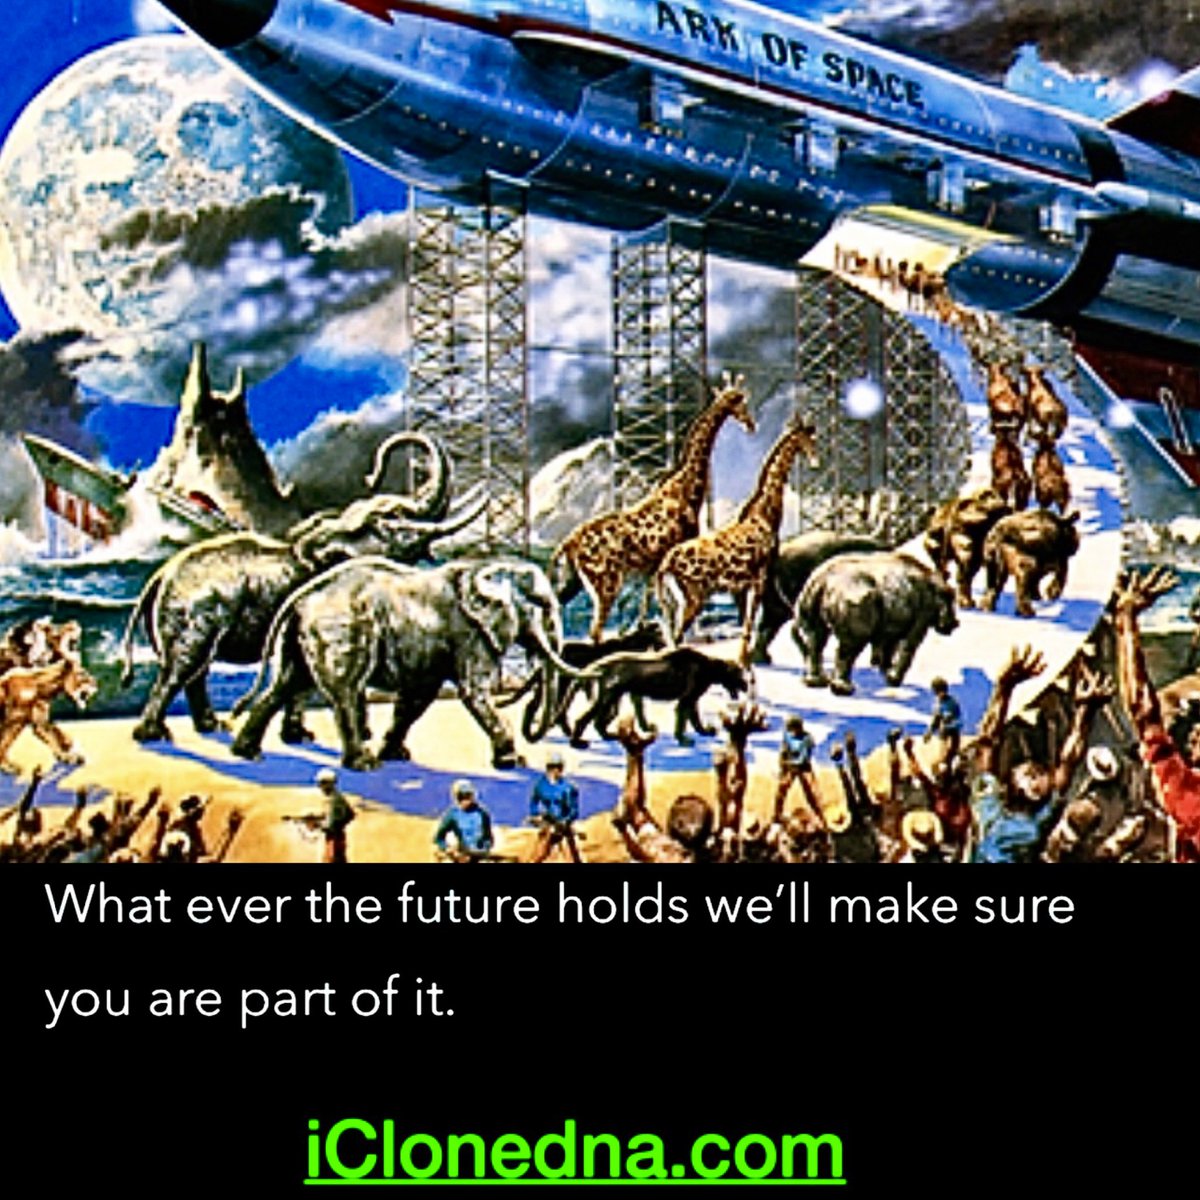 #Biotechnology #dna #artificalintelligence #chatgpt #ELON #elonmusk #spacex #humans #cloning #futurehumans #humanity #news #geneticengineering #medicalstudents #life #CRISPR #alllife #Tech4All #moon #mars #planets #crisprcas9 #biotech #news